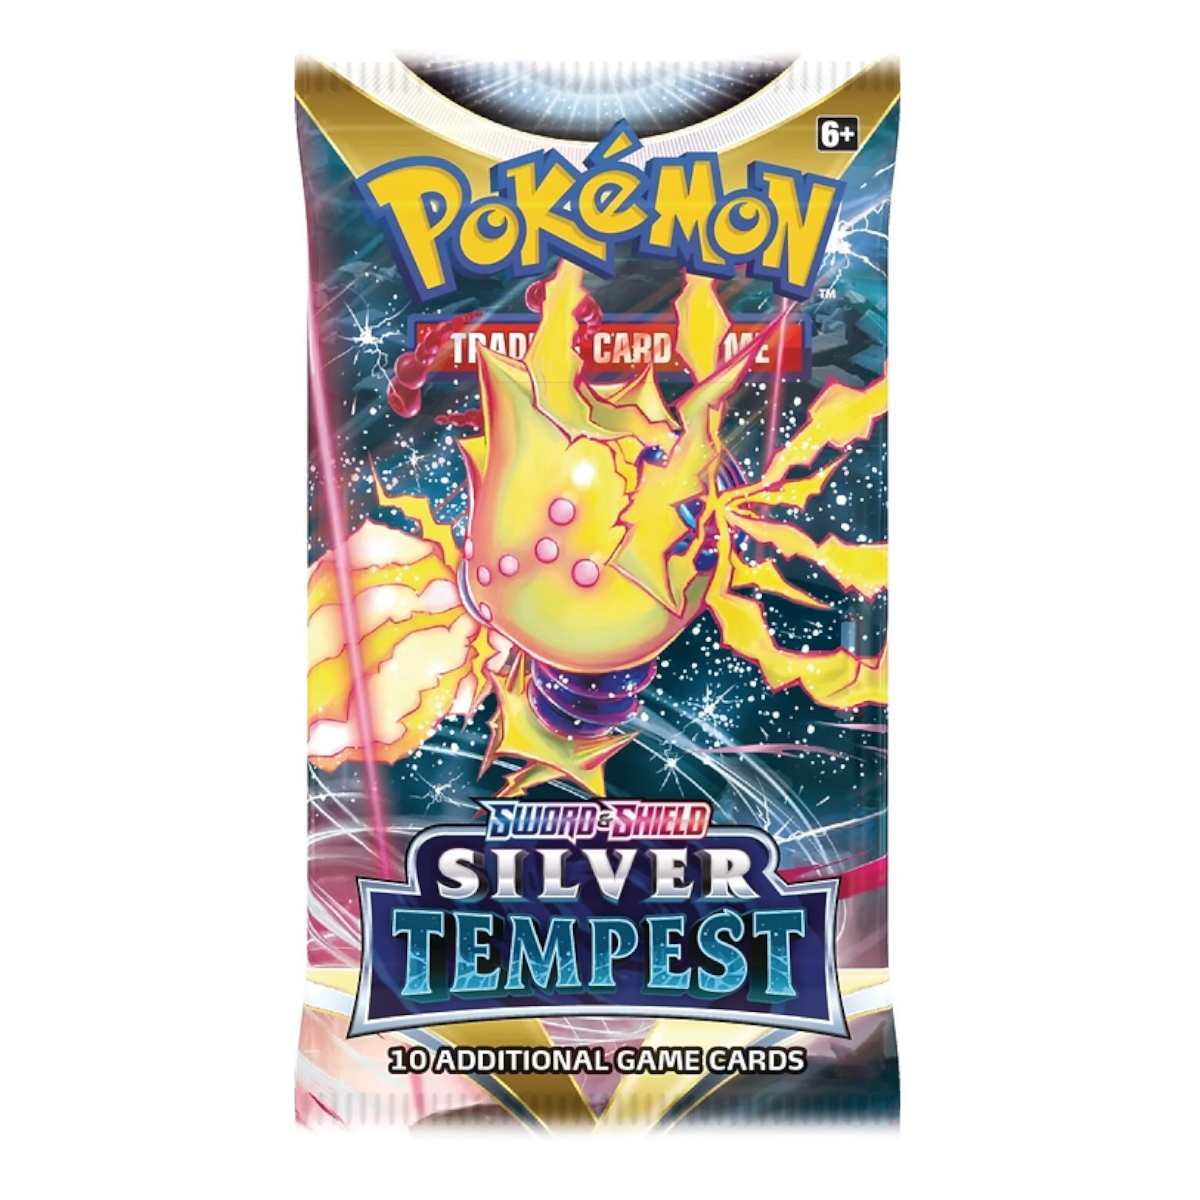 Pokémon - Silver Tempest Booster